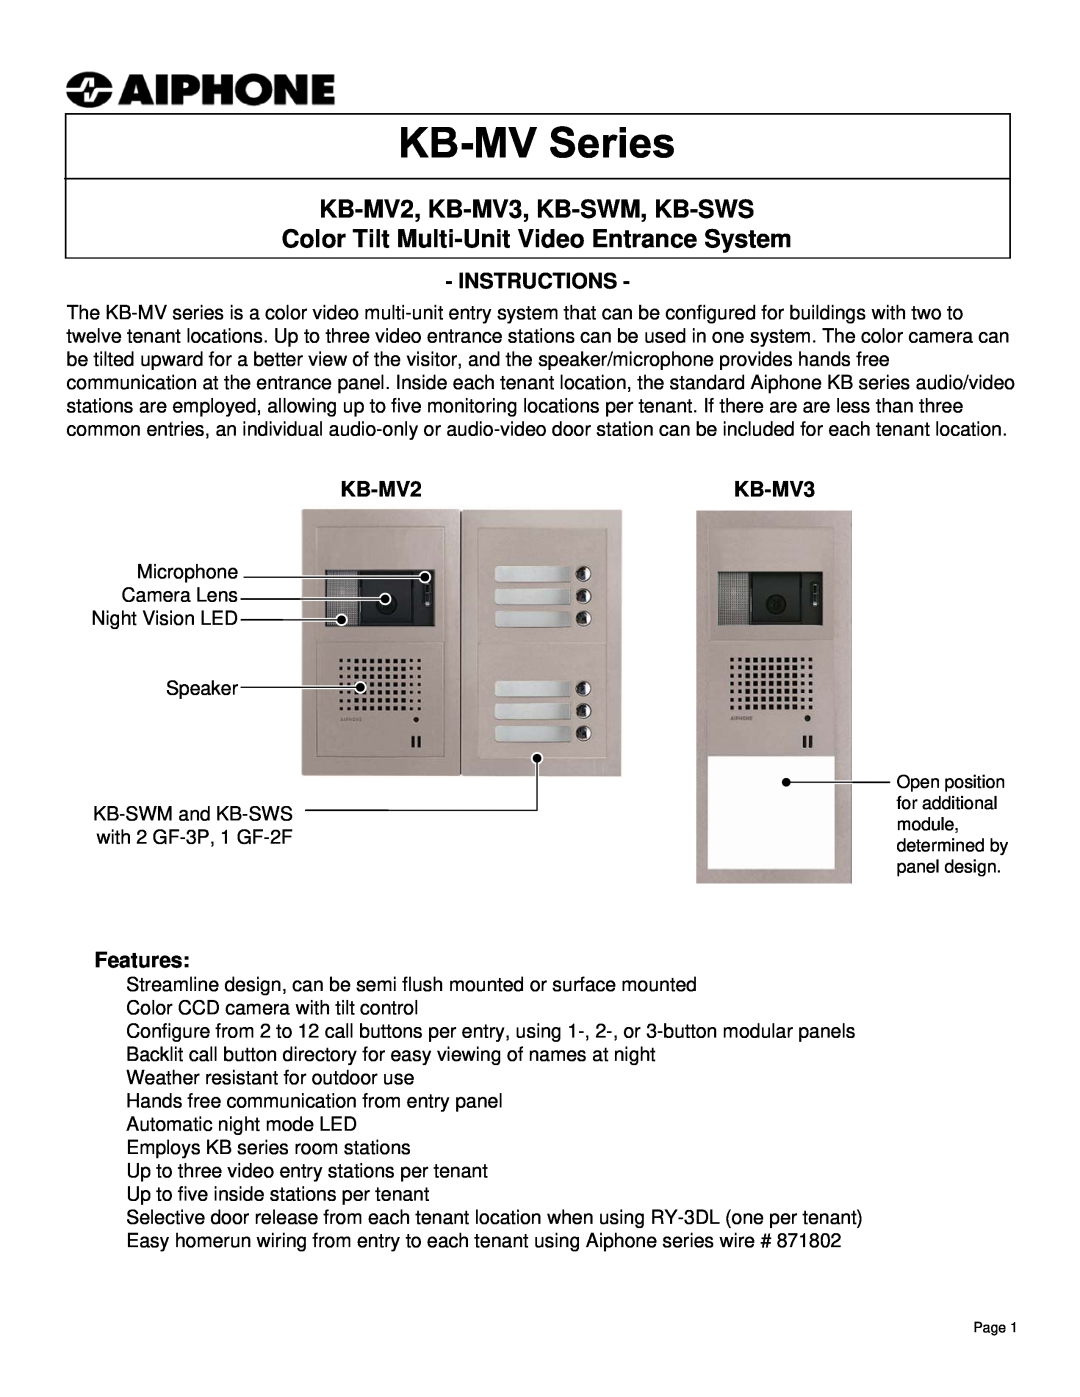 Aiphone manual Instructions, Features, KB-MV2, KB-MV3, KB-SWM, KB-SWS 